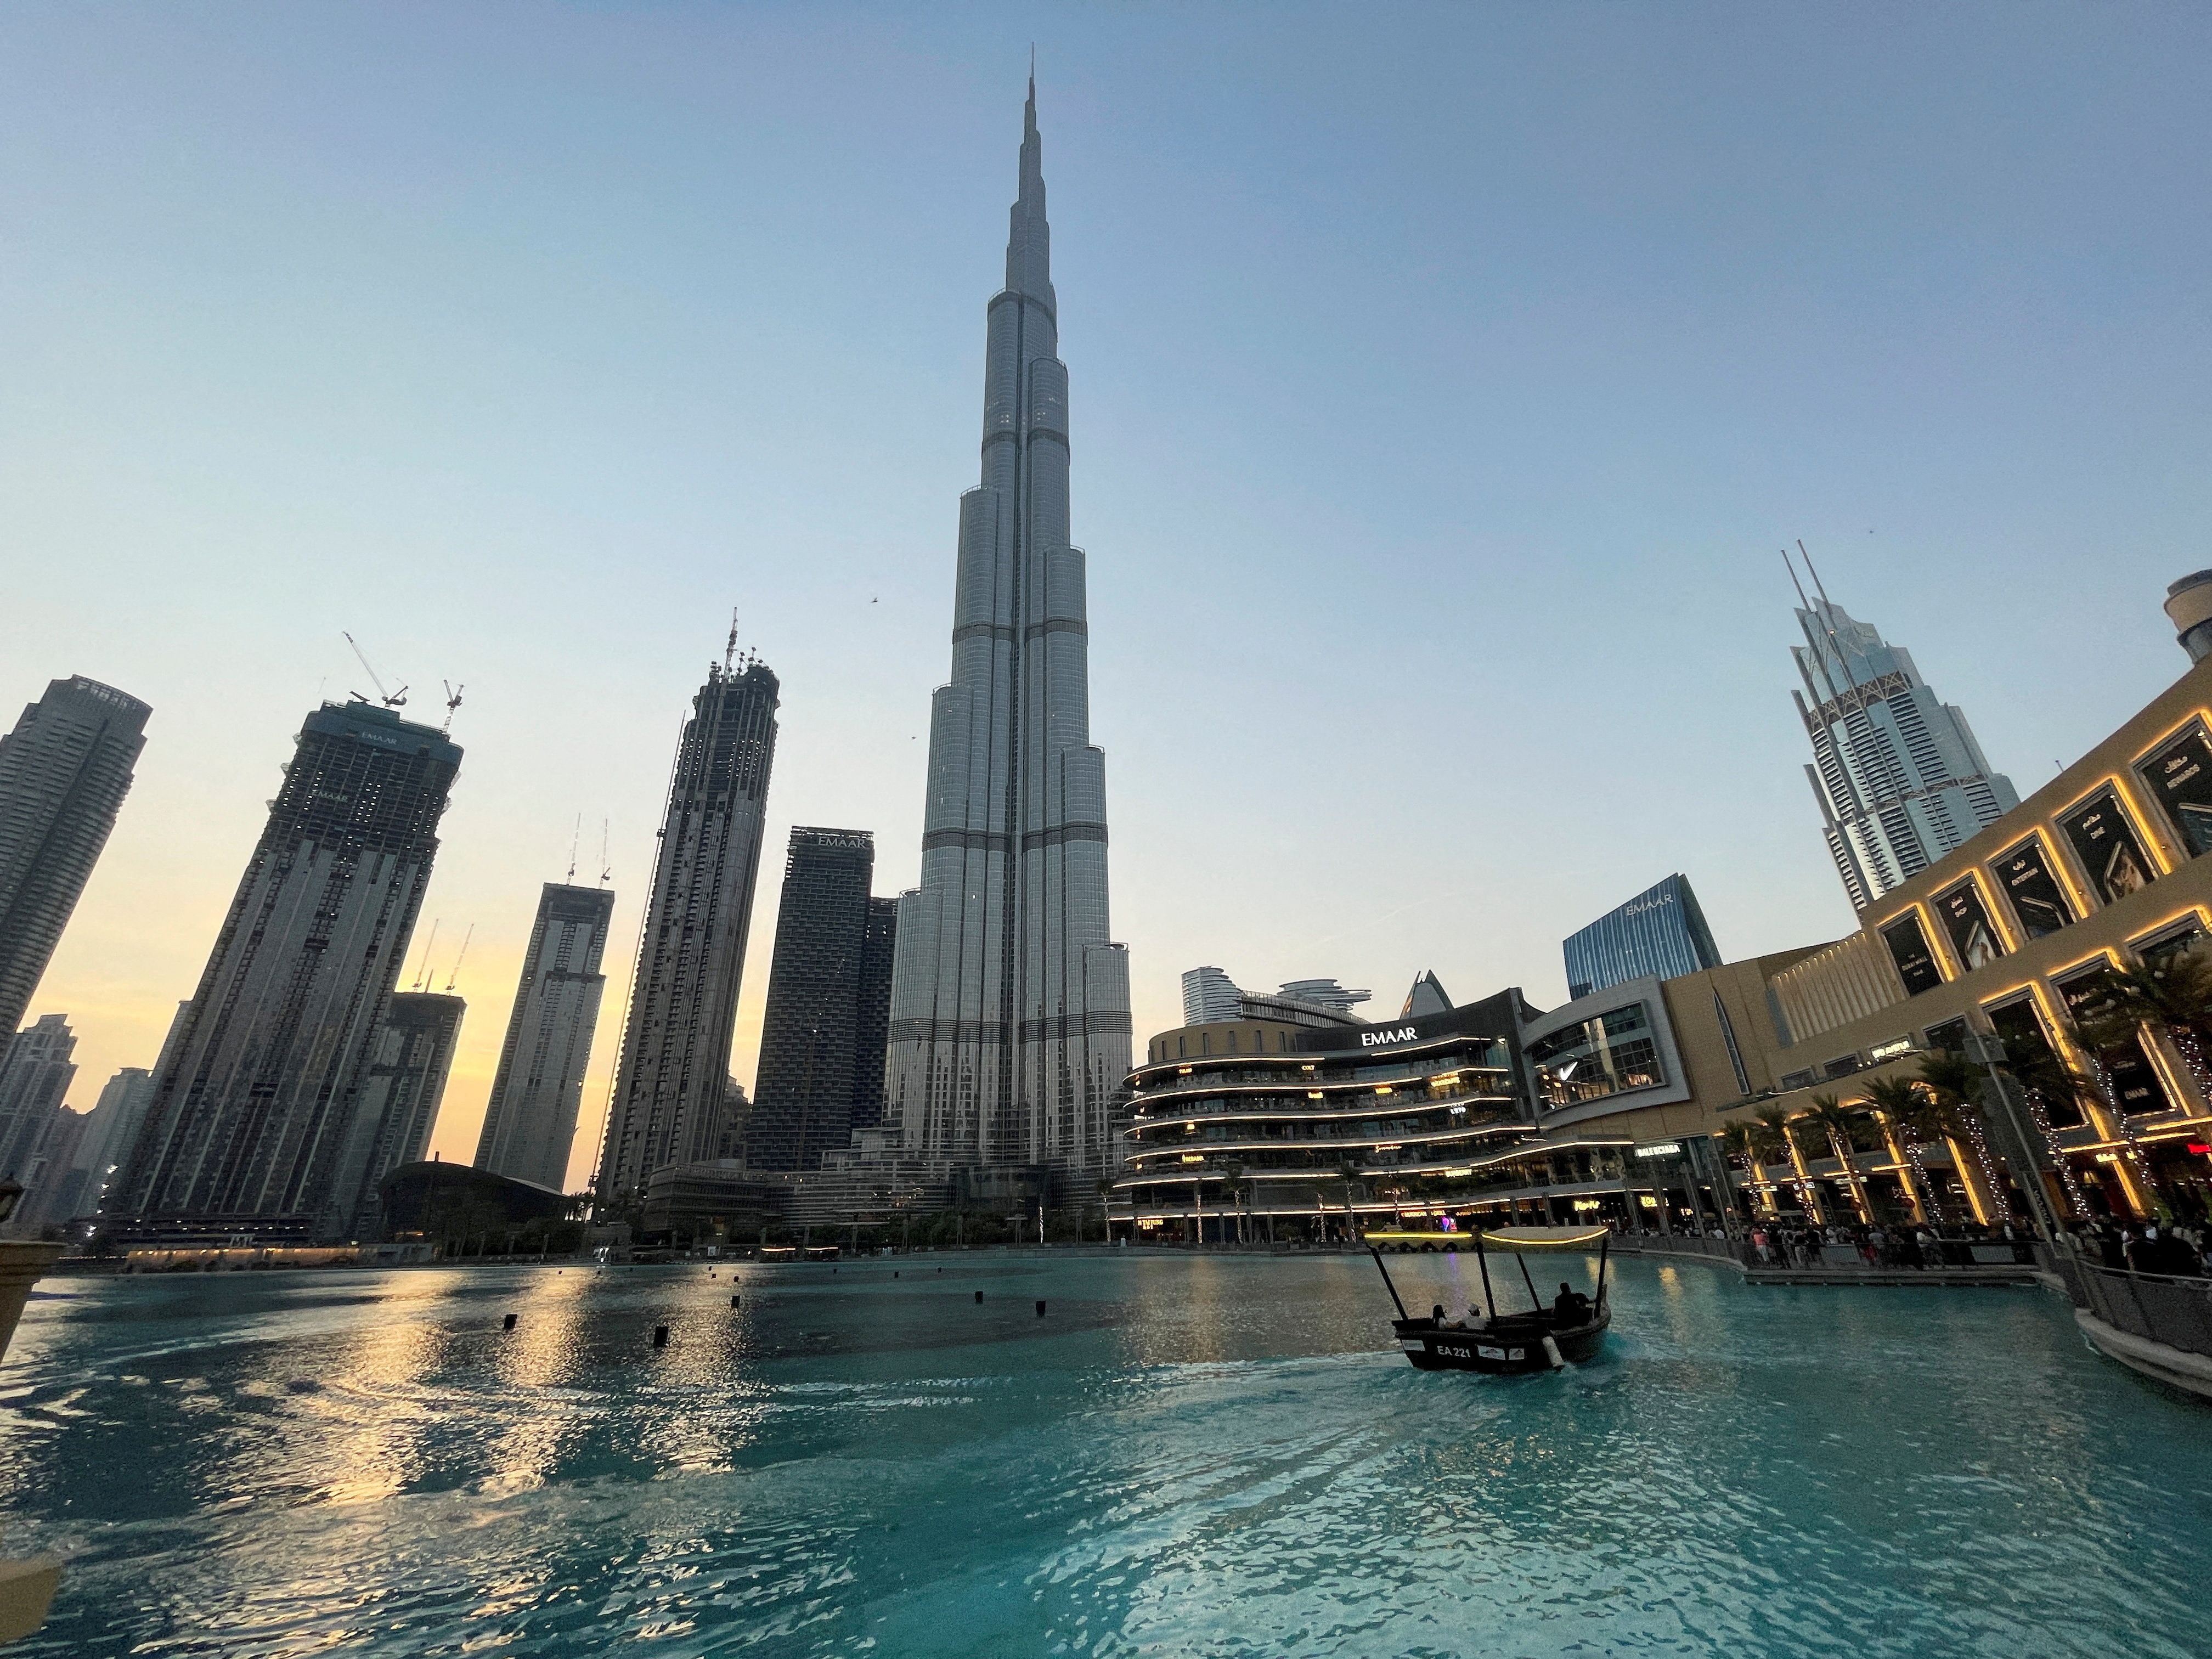 Vista general del skyline de Dubái y la Burj Khalifa que emerge entre las torres de esta ciudad de Asia (REUTERS/Mohammed Salem)